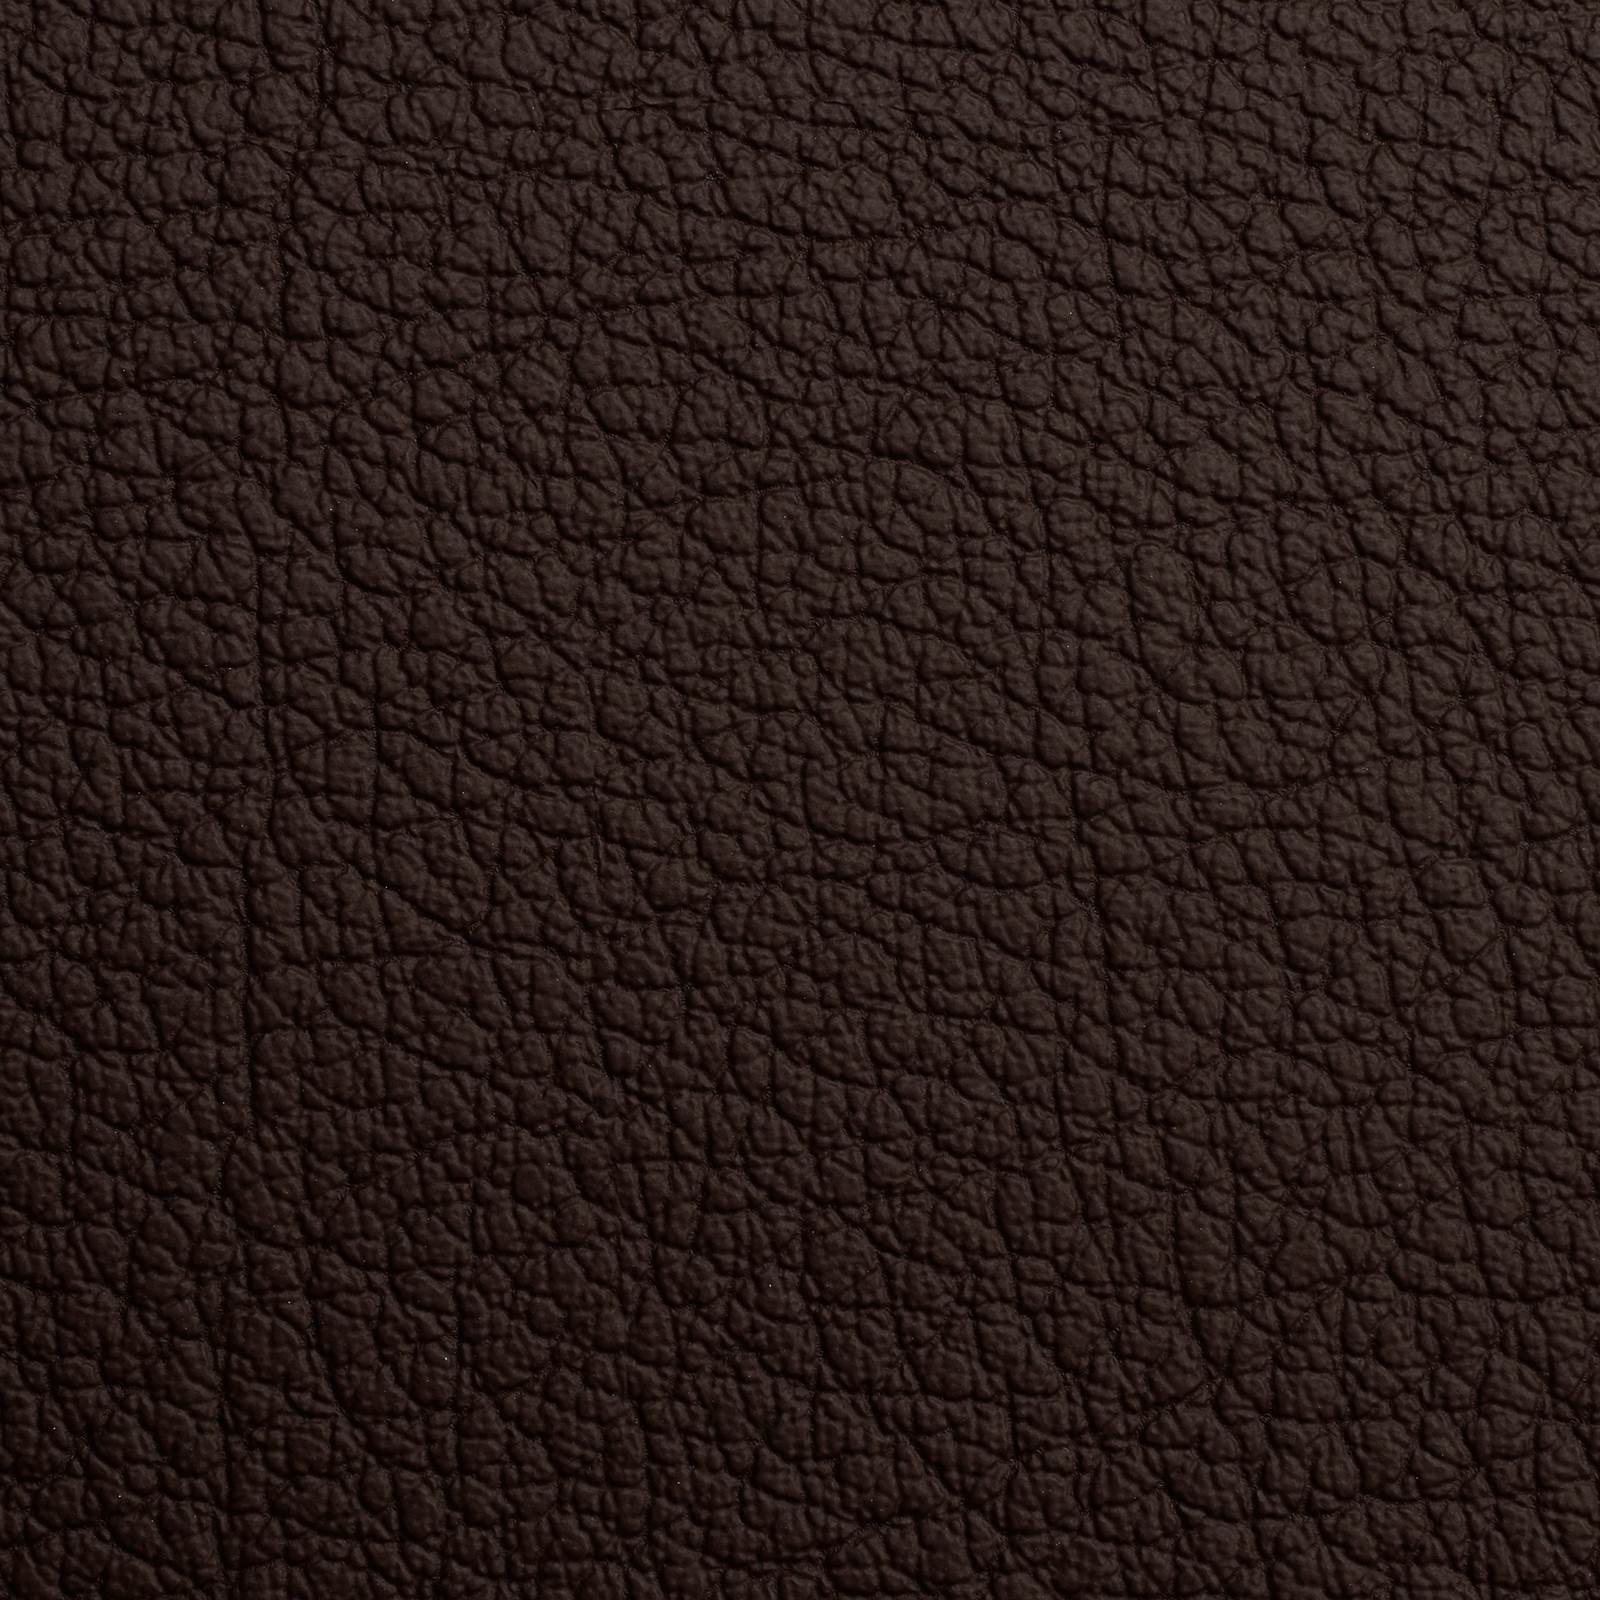 Skytex imitation leather flame retardant B1 (dark brown)